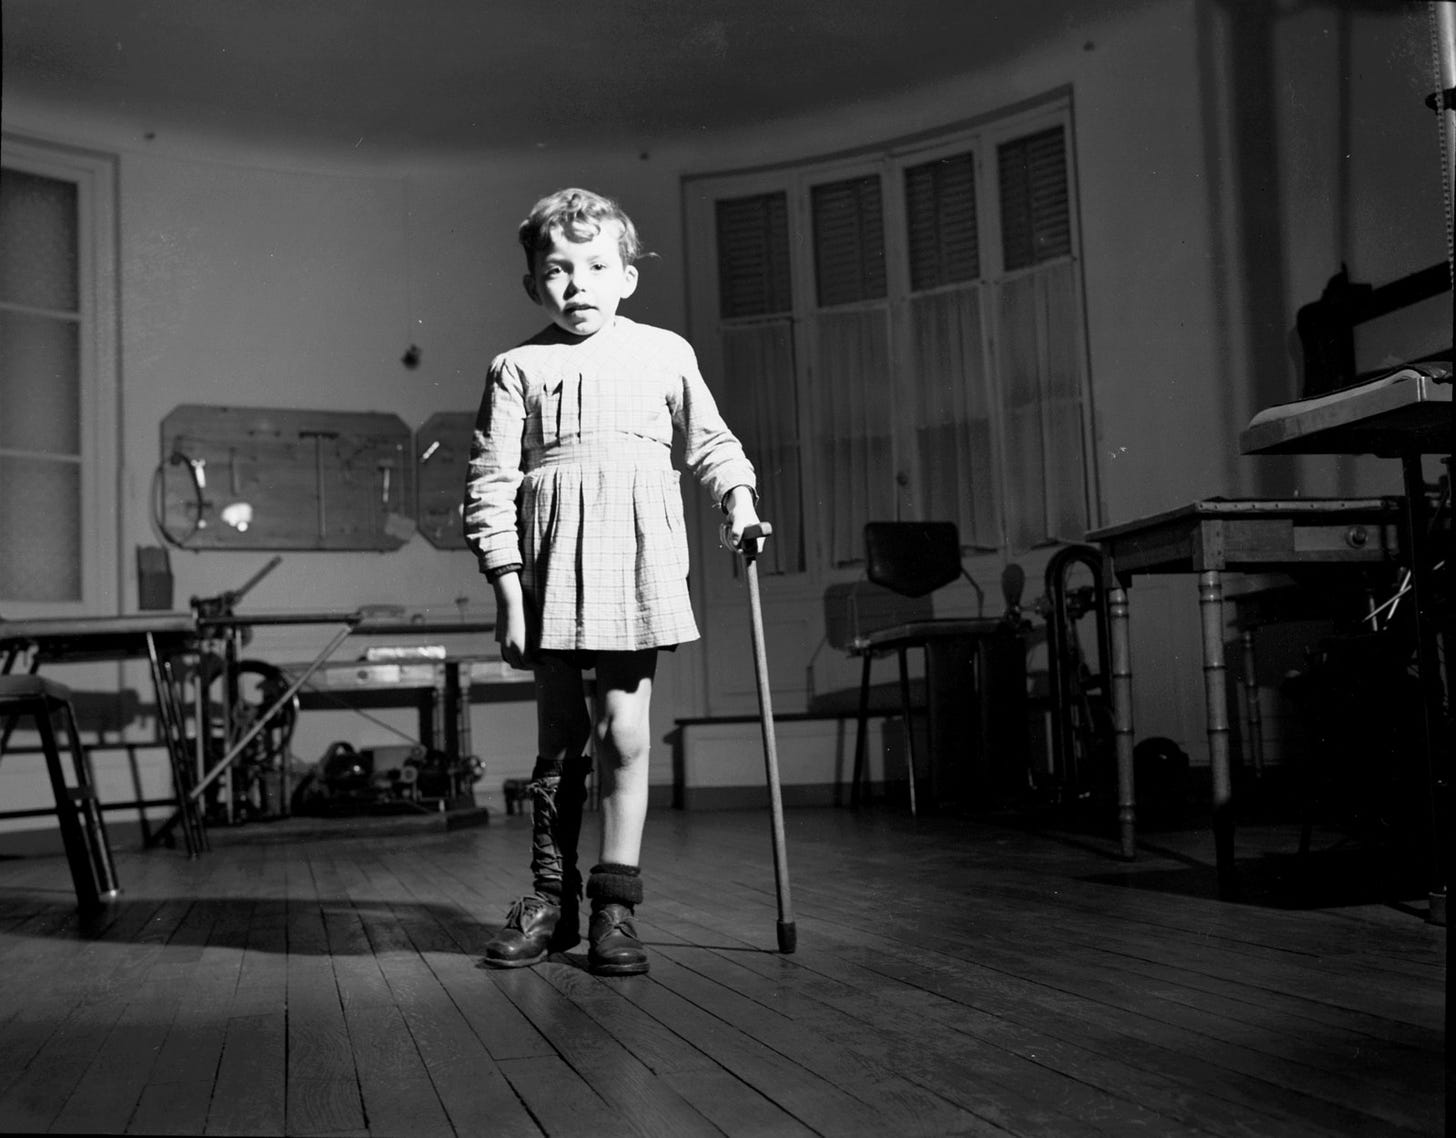 French clinic for polio victims] - NARA & DVIDS Public Domain Archive  Public Domain Search